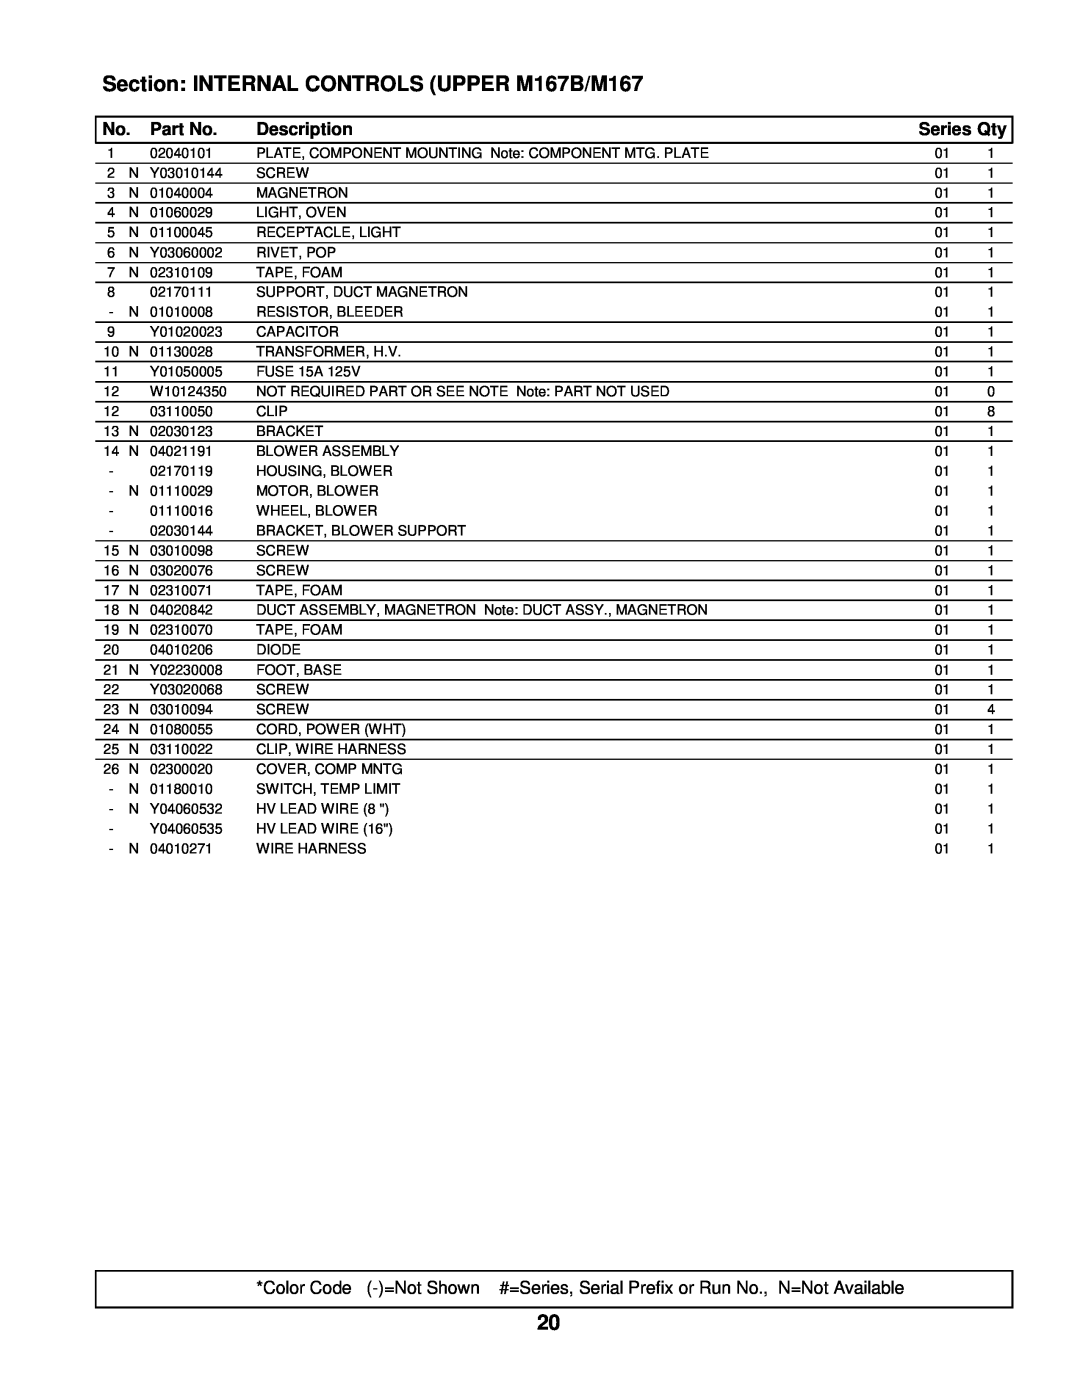 Maytag WM277B manual Section INTERNAL CONTROLS UPPER M167B/M167, Description, Series Qty 